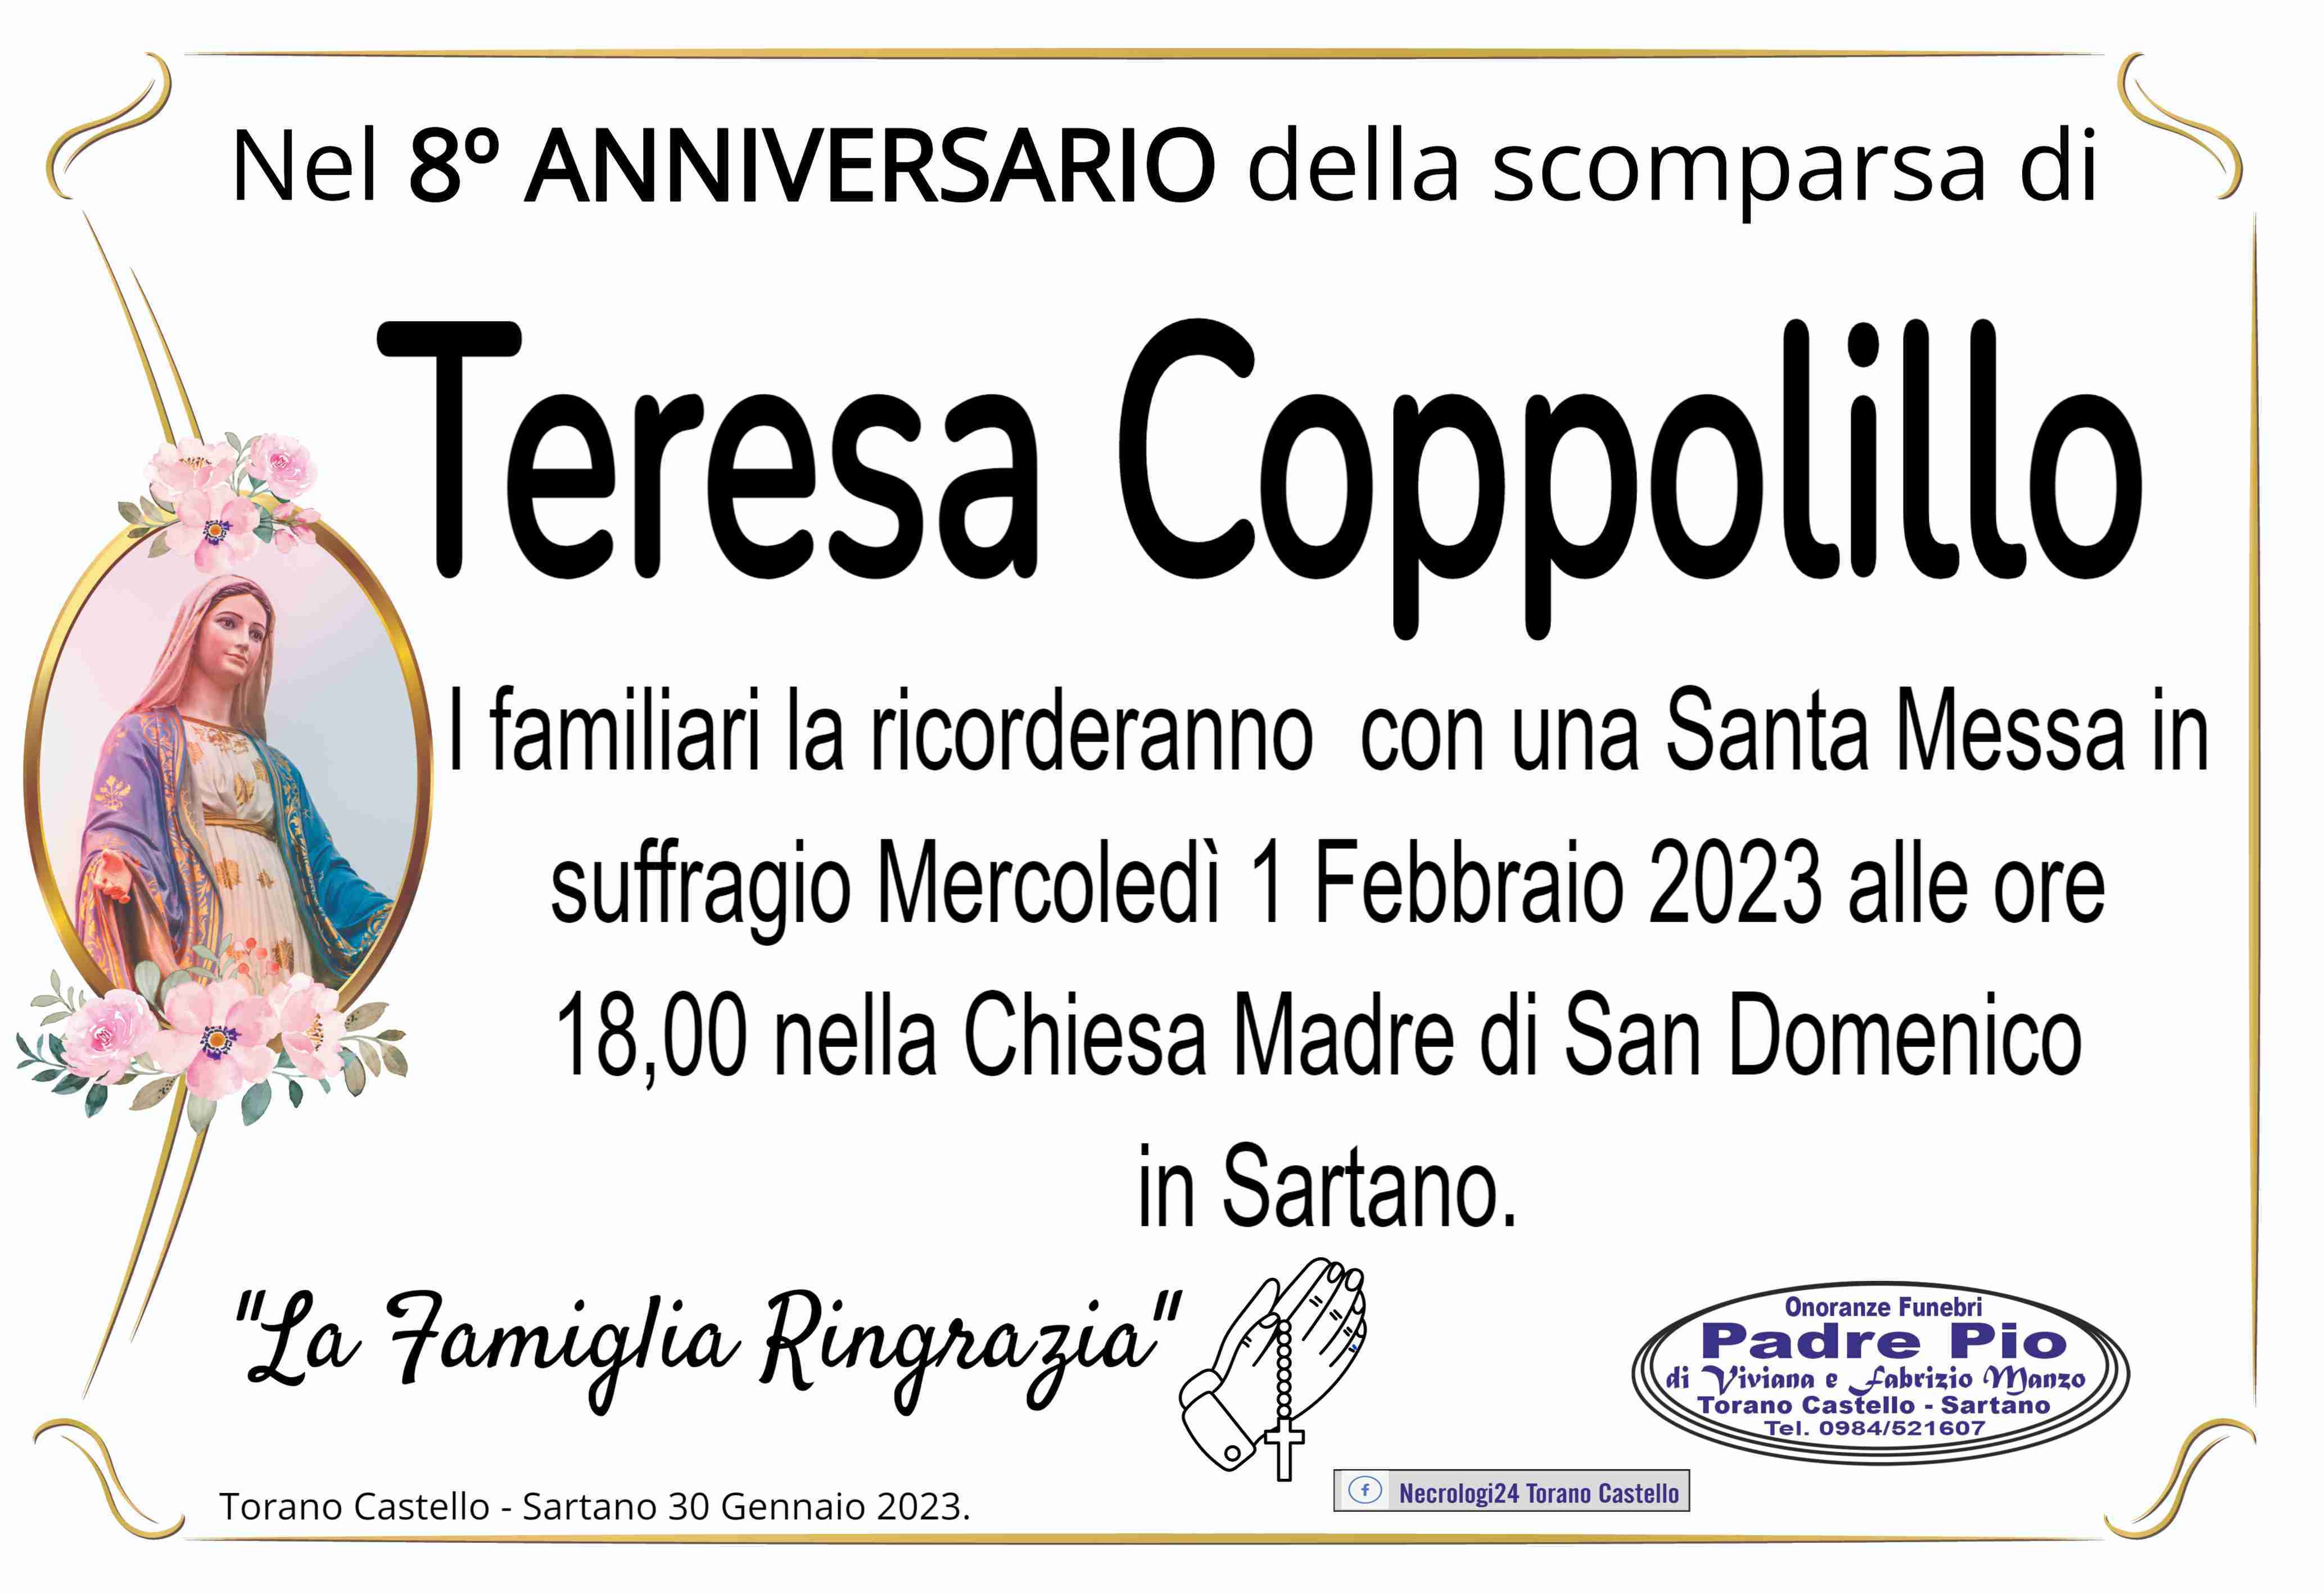 Teresa Coppolillo